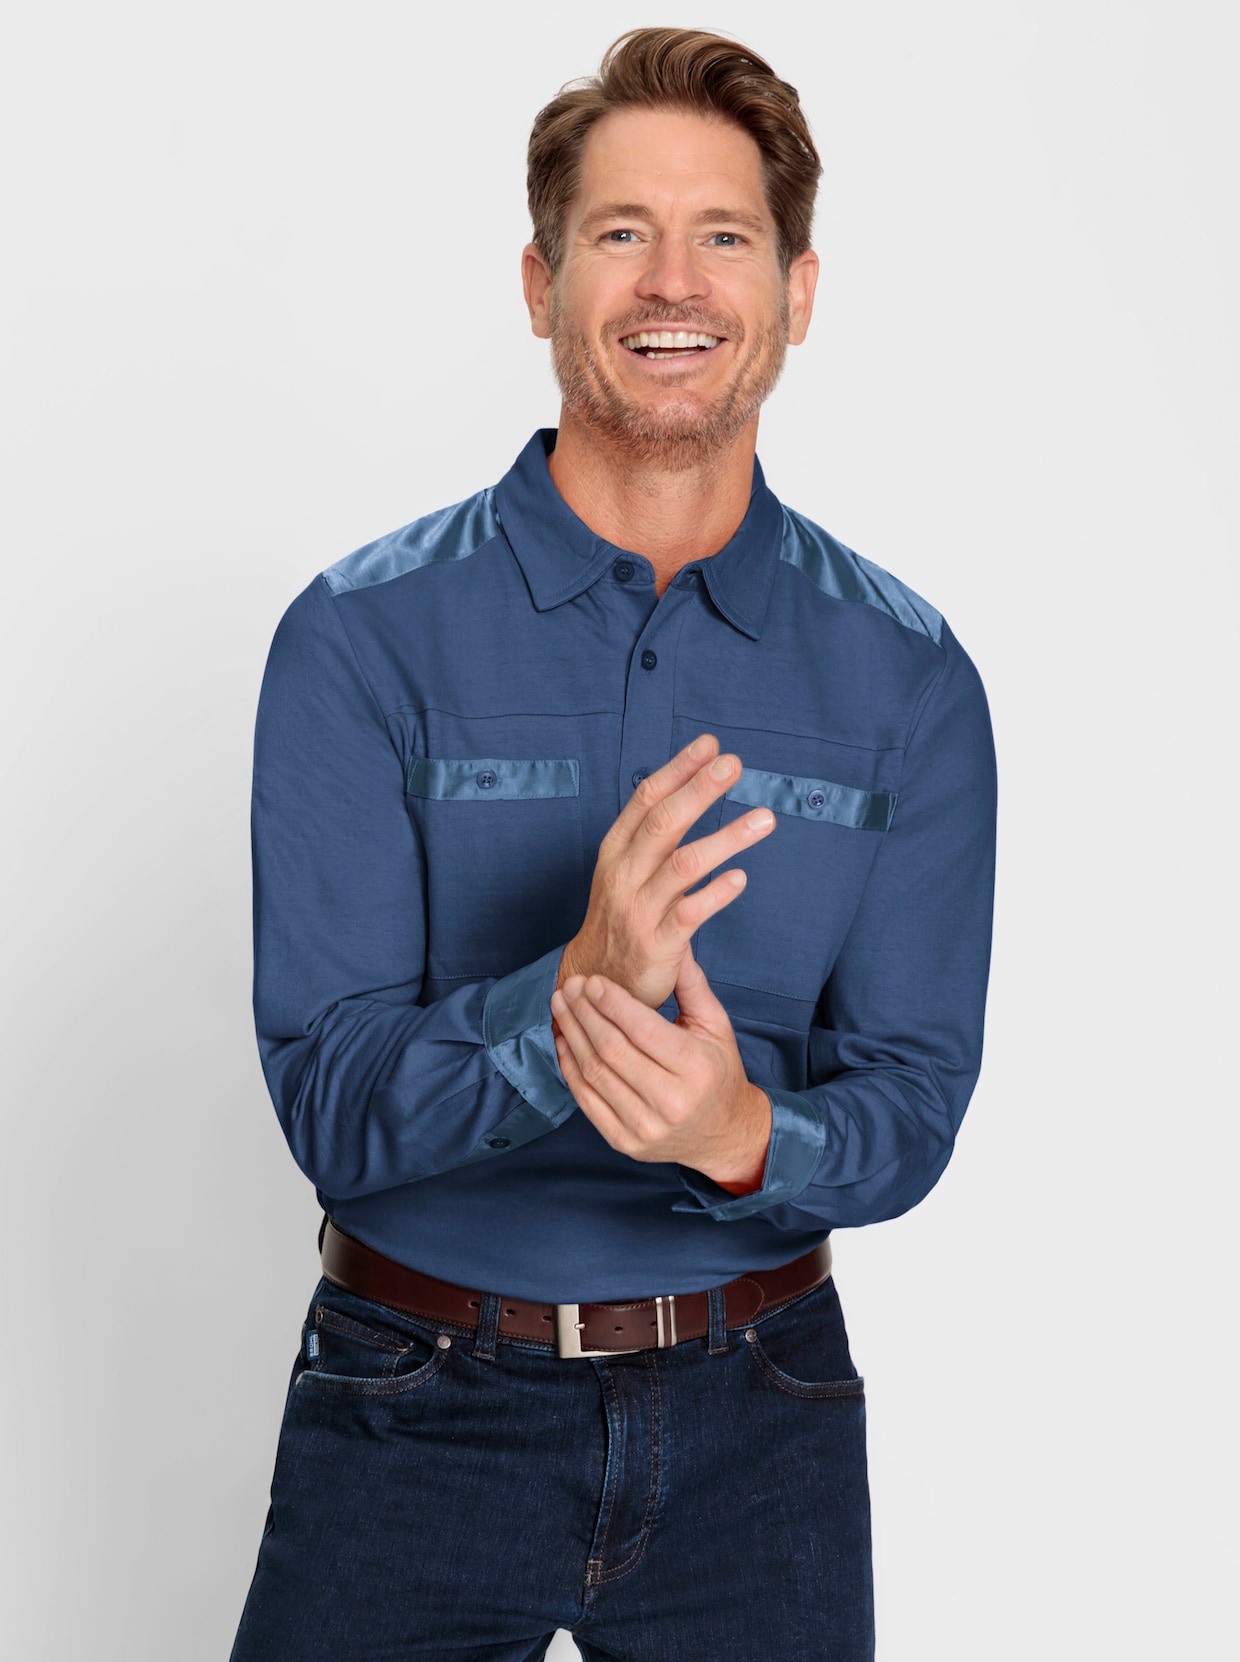 Marco Donati Poloshirt met lange mouwen - jeansblauw